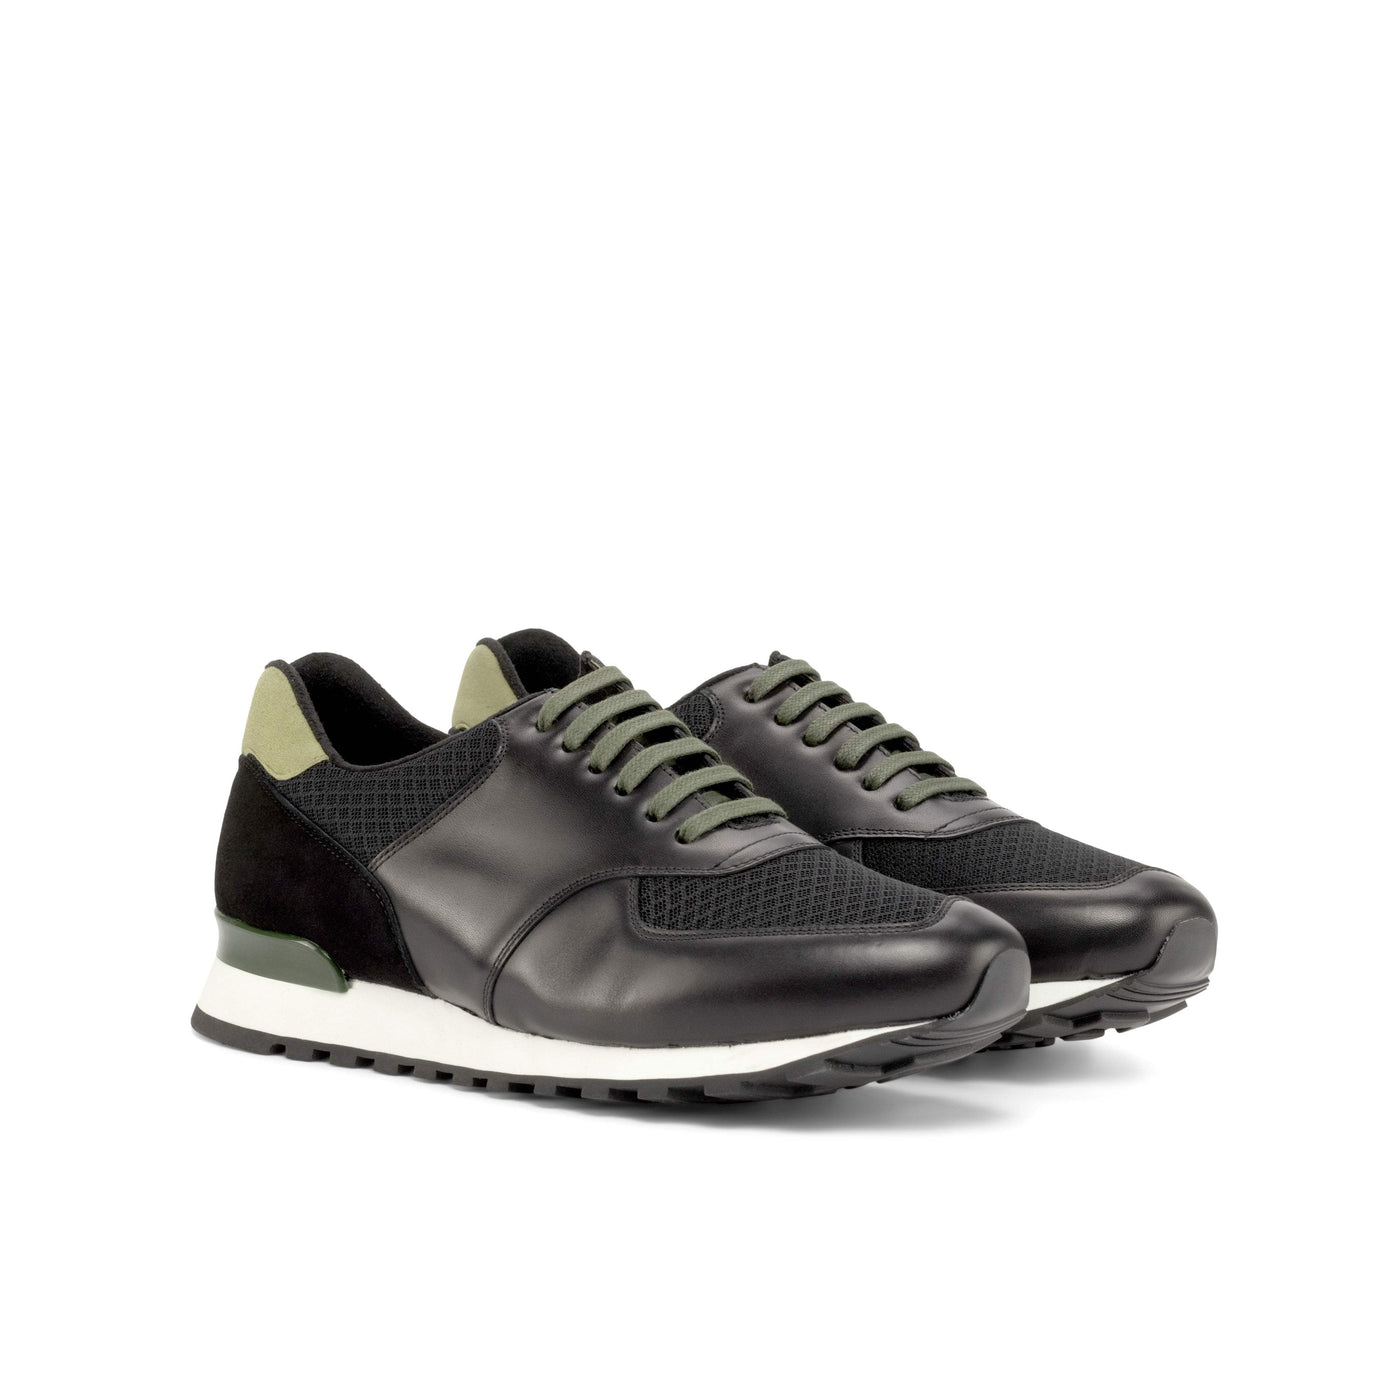 Men's Jogger Sneakers Leather Black Green 4880 3- MERRIMIUM